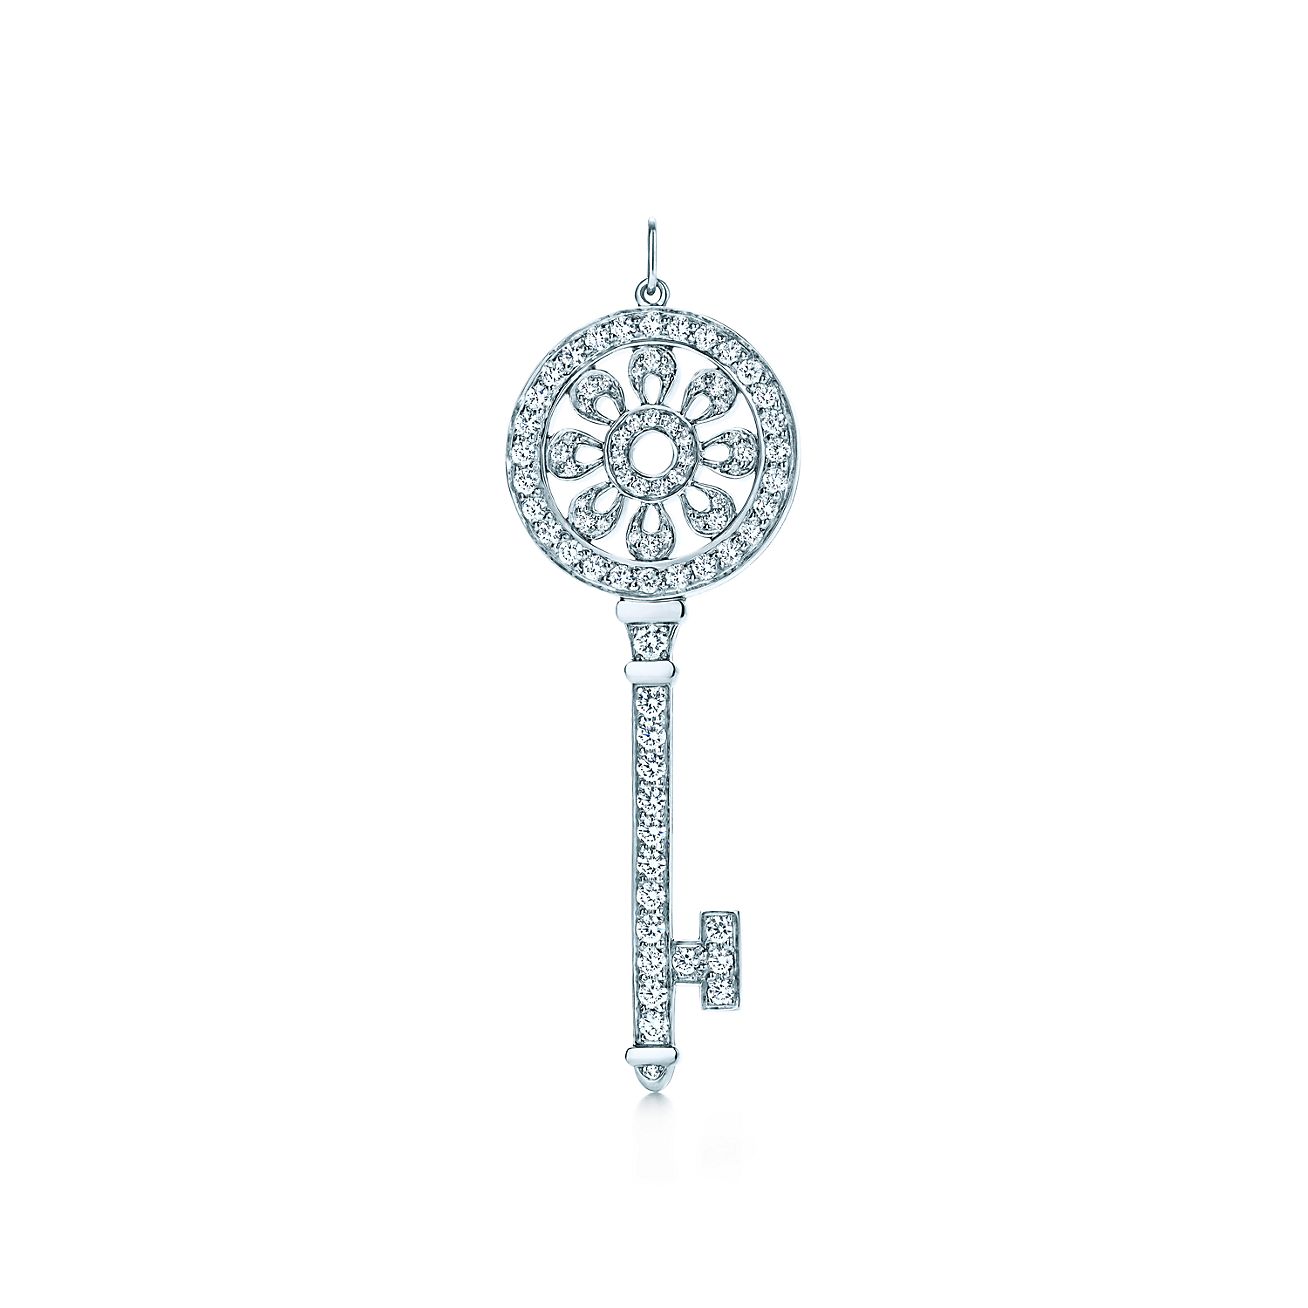 Tiffany Keys petals key pendant in 